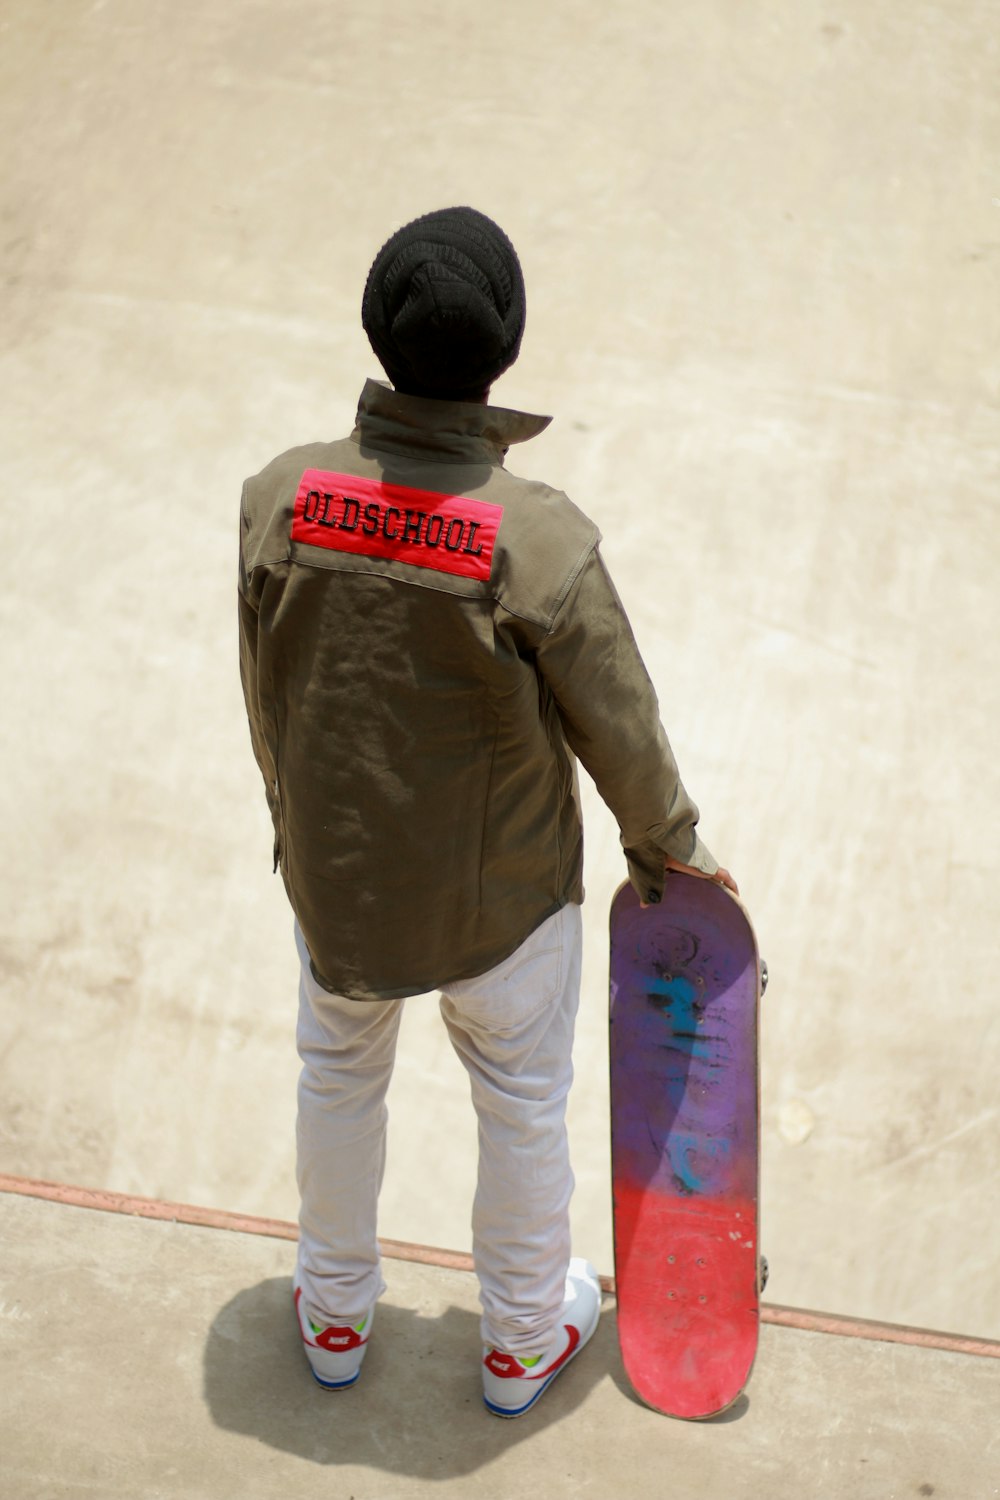 a kid holding a skateboard